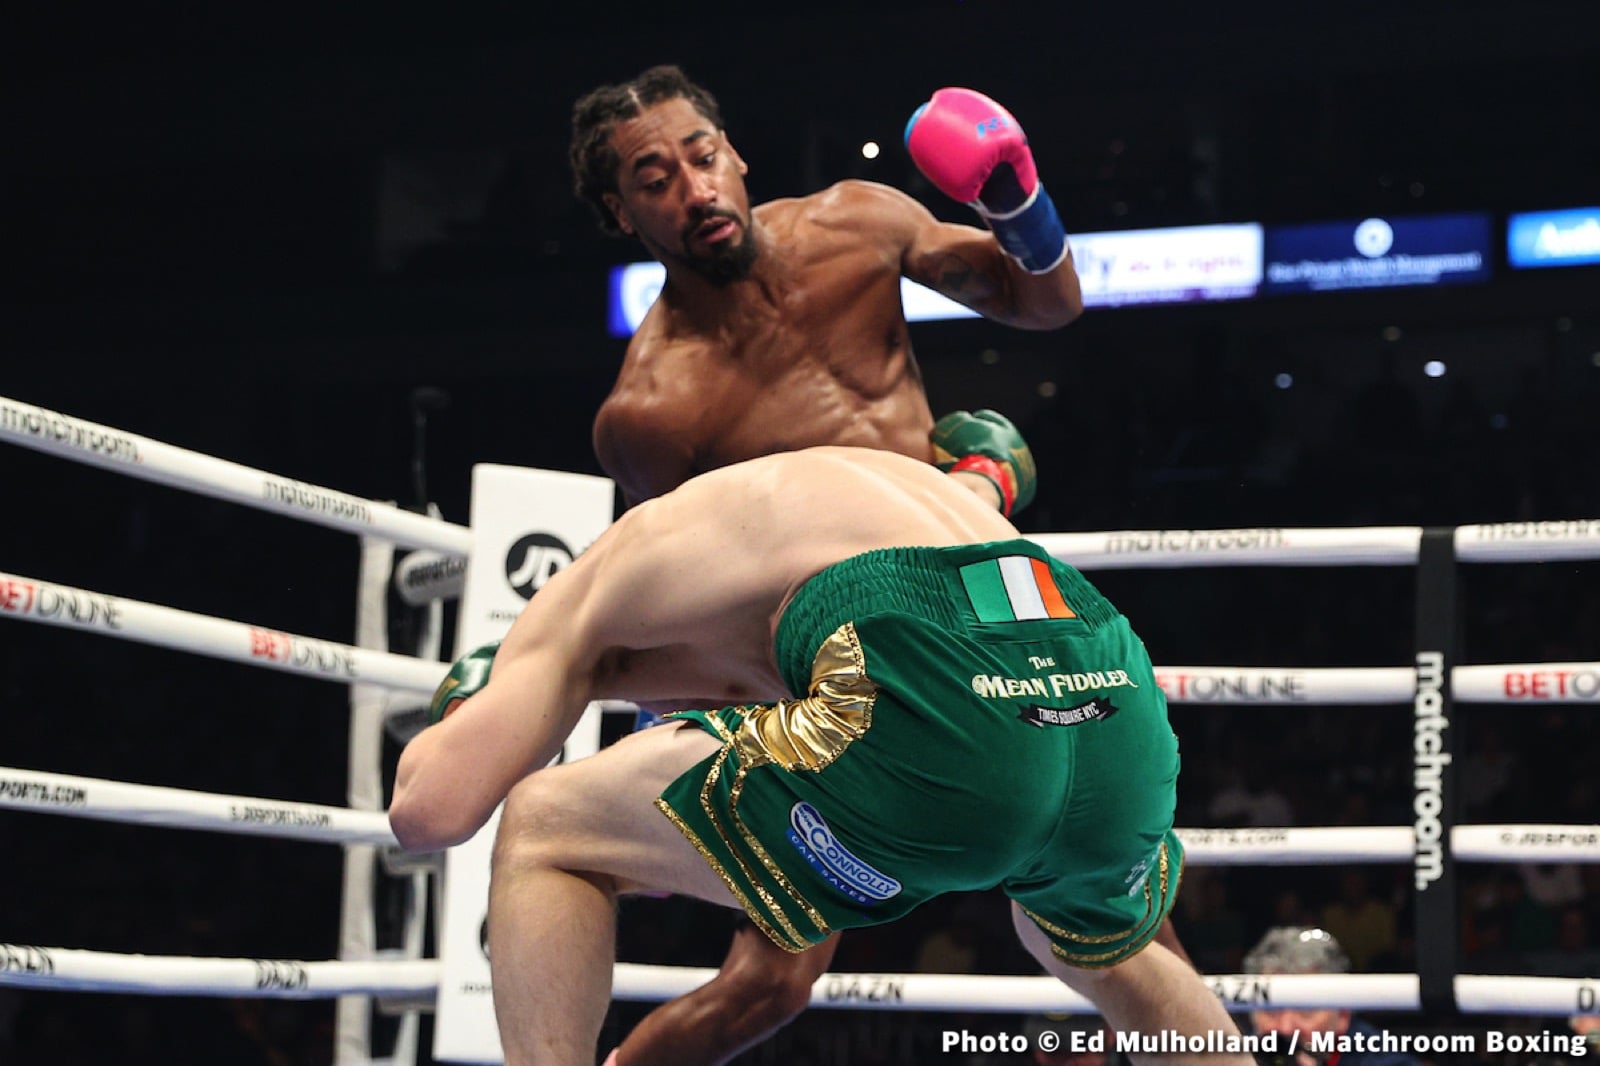 McWilliams Arroyo boxing image / photo